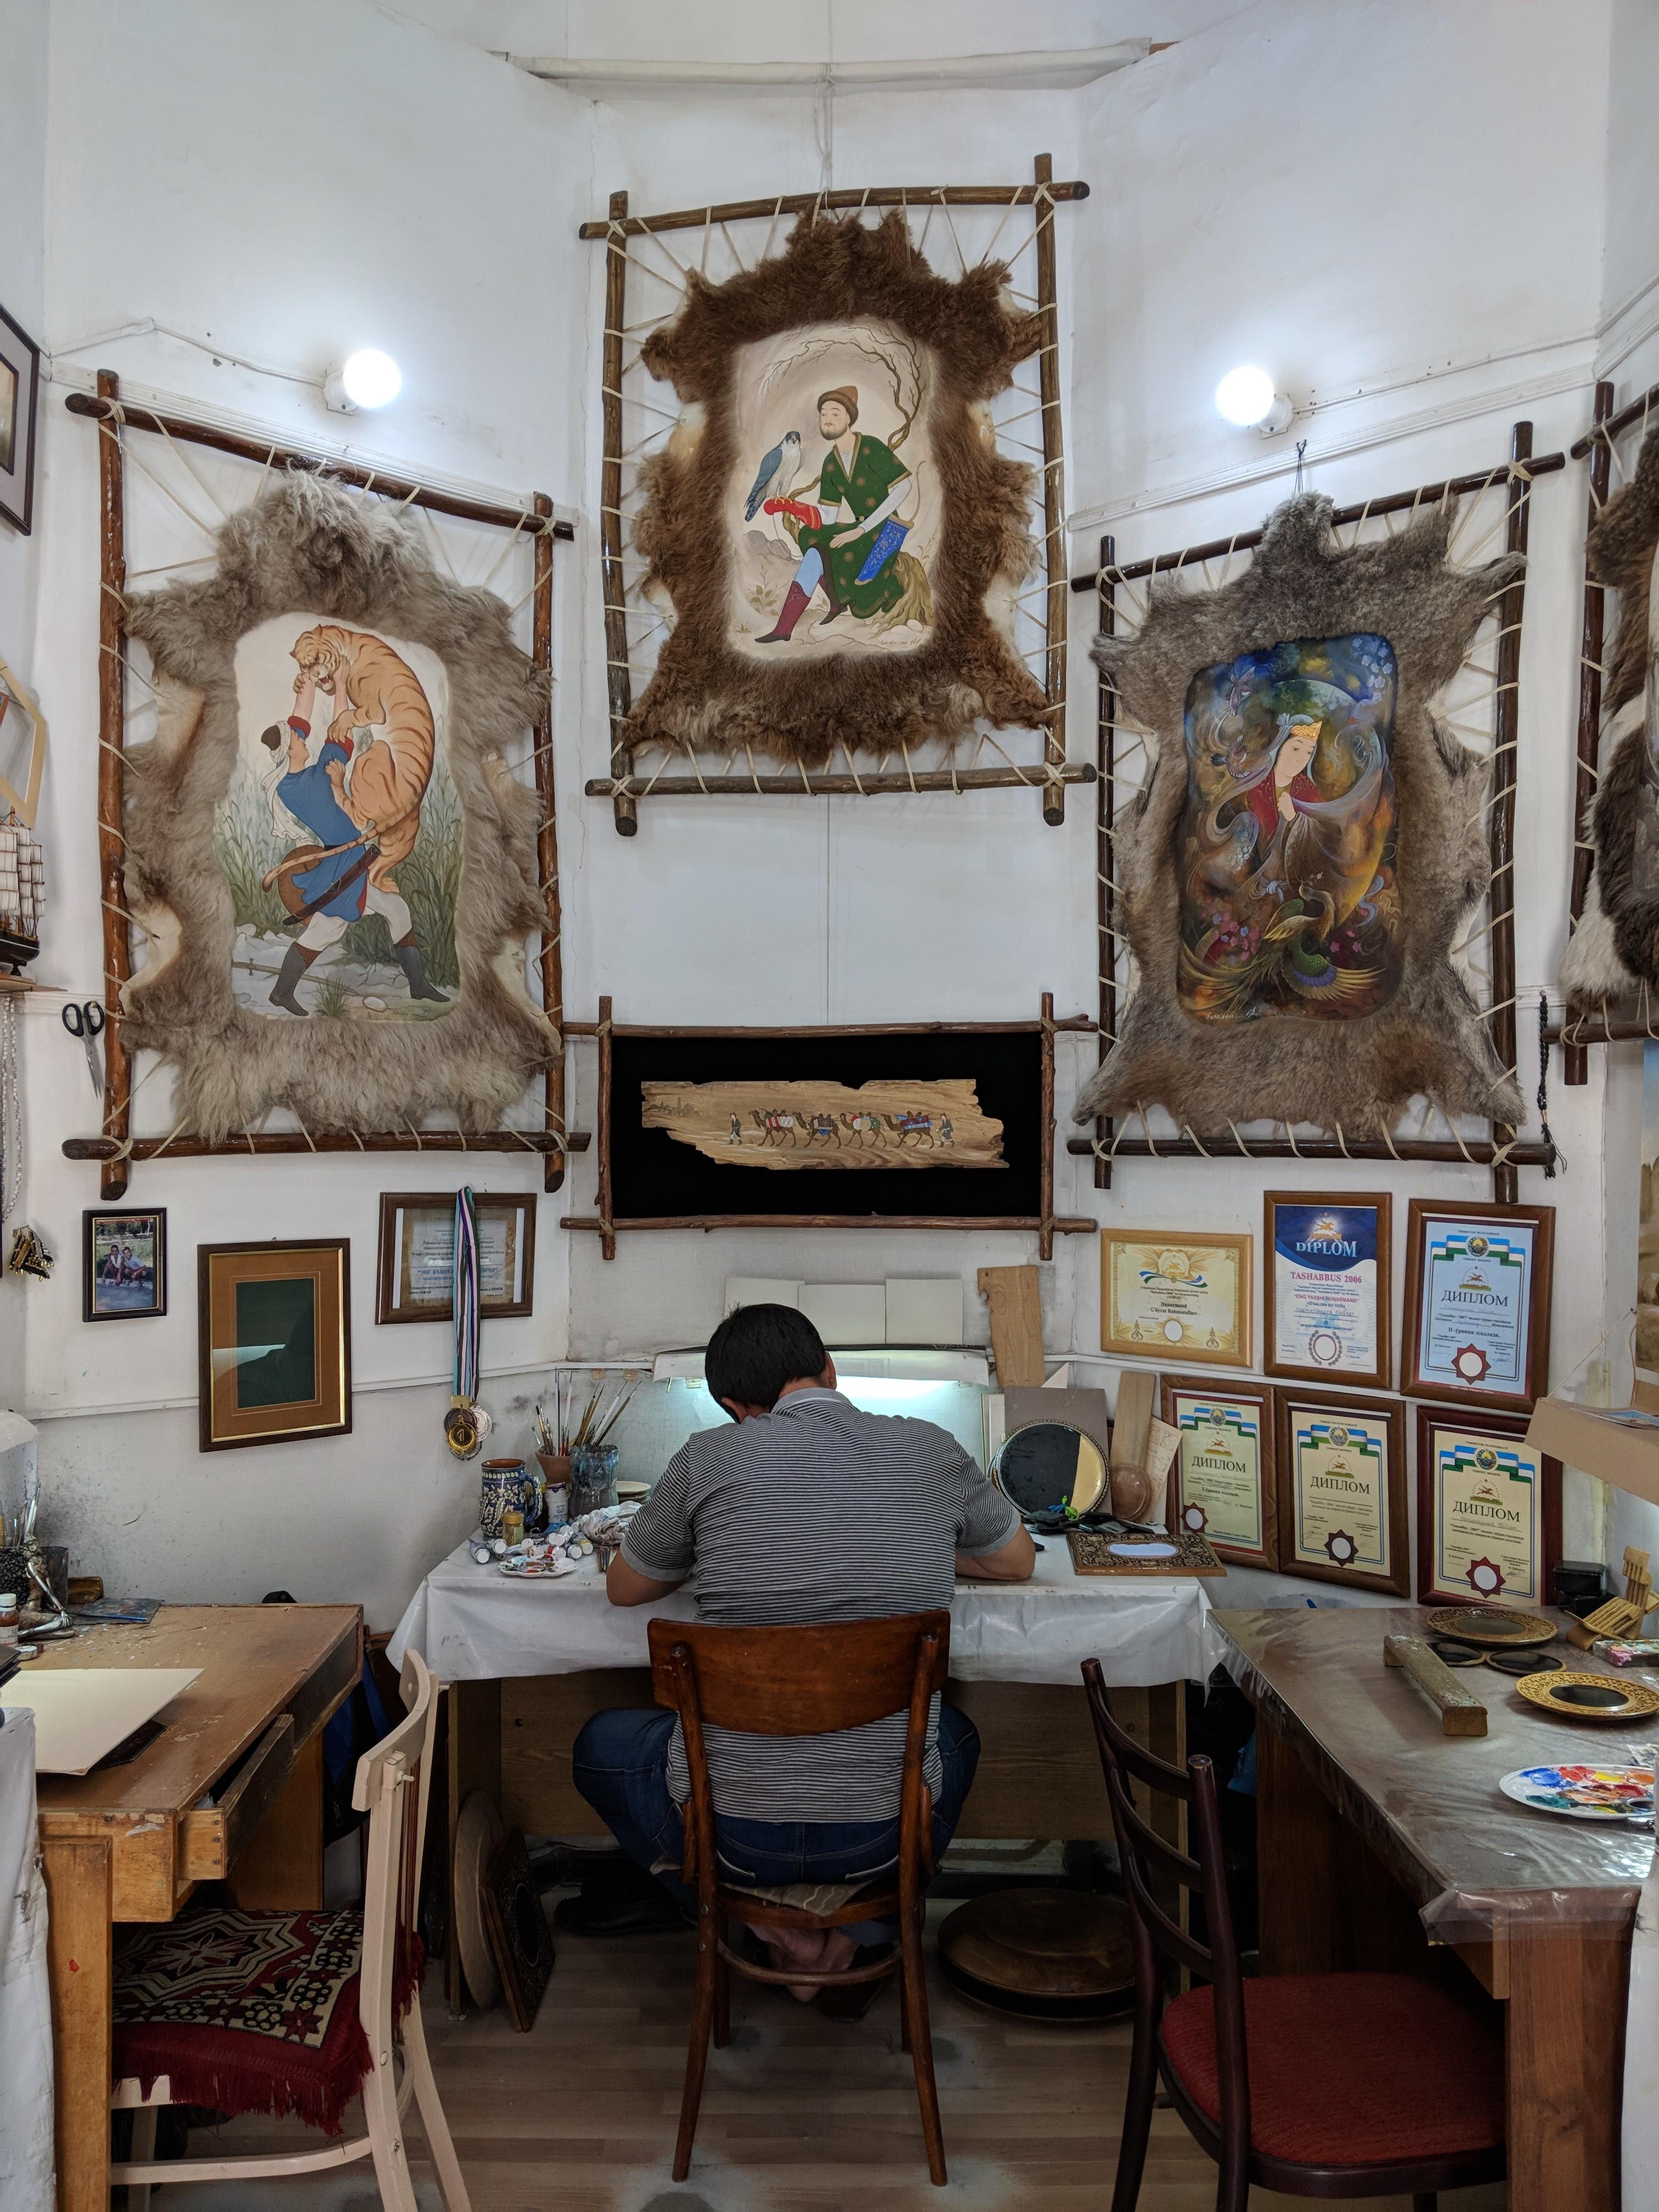 The artisans of Tashkent / Photo by Brian Ma